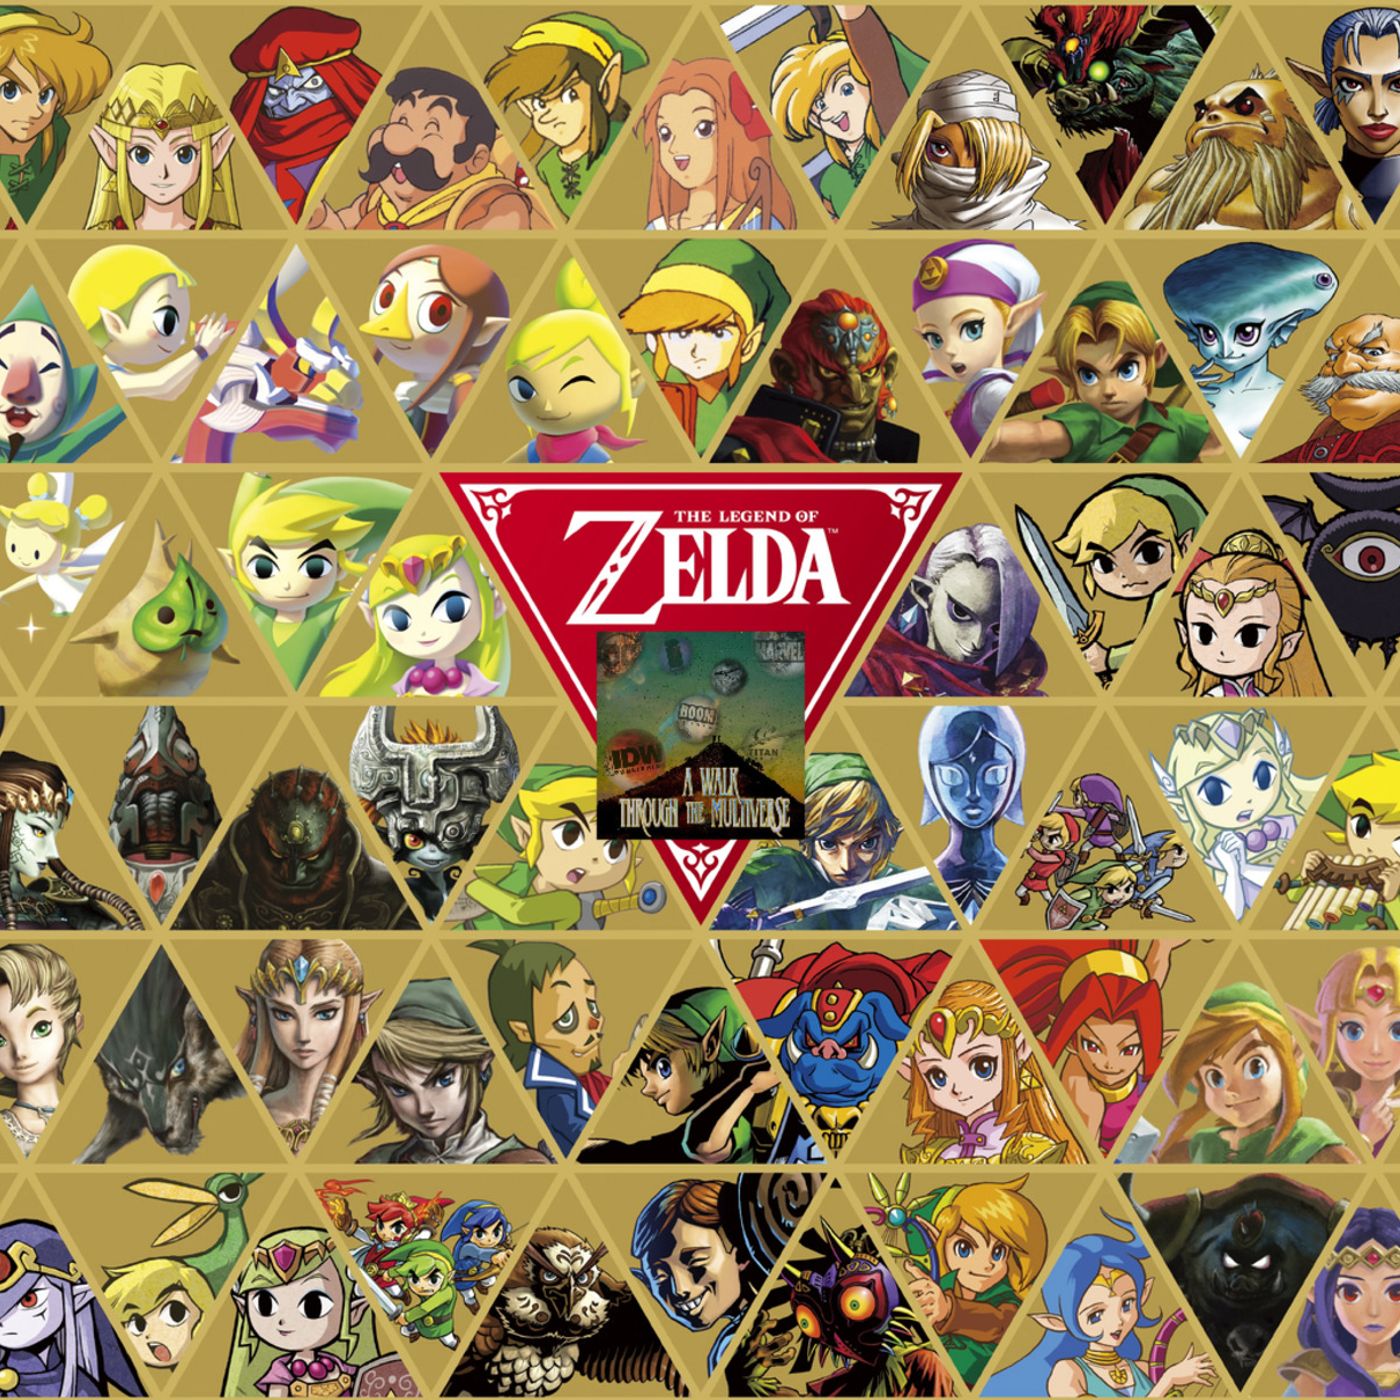 The Legend of Zelda Series - A Walk Through The Multiverse Episode 60